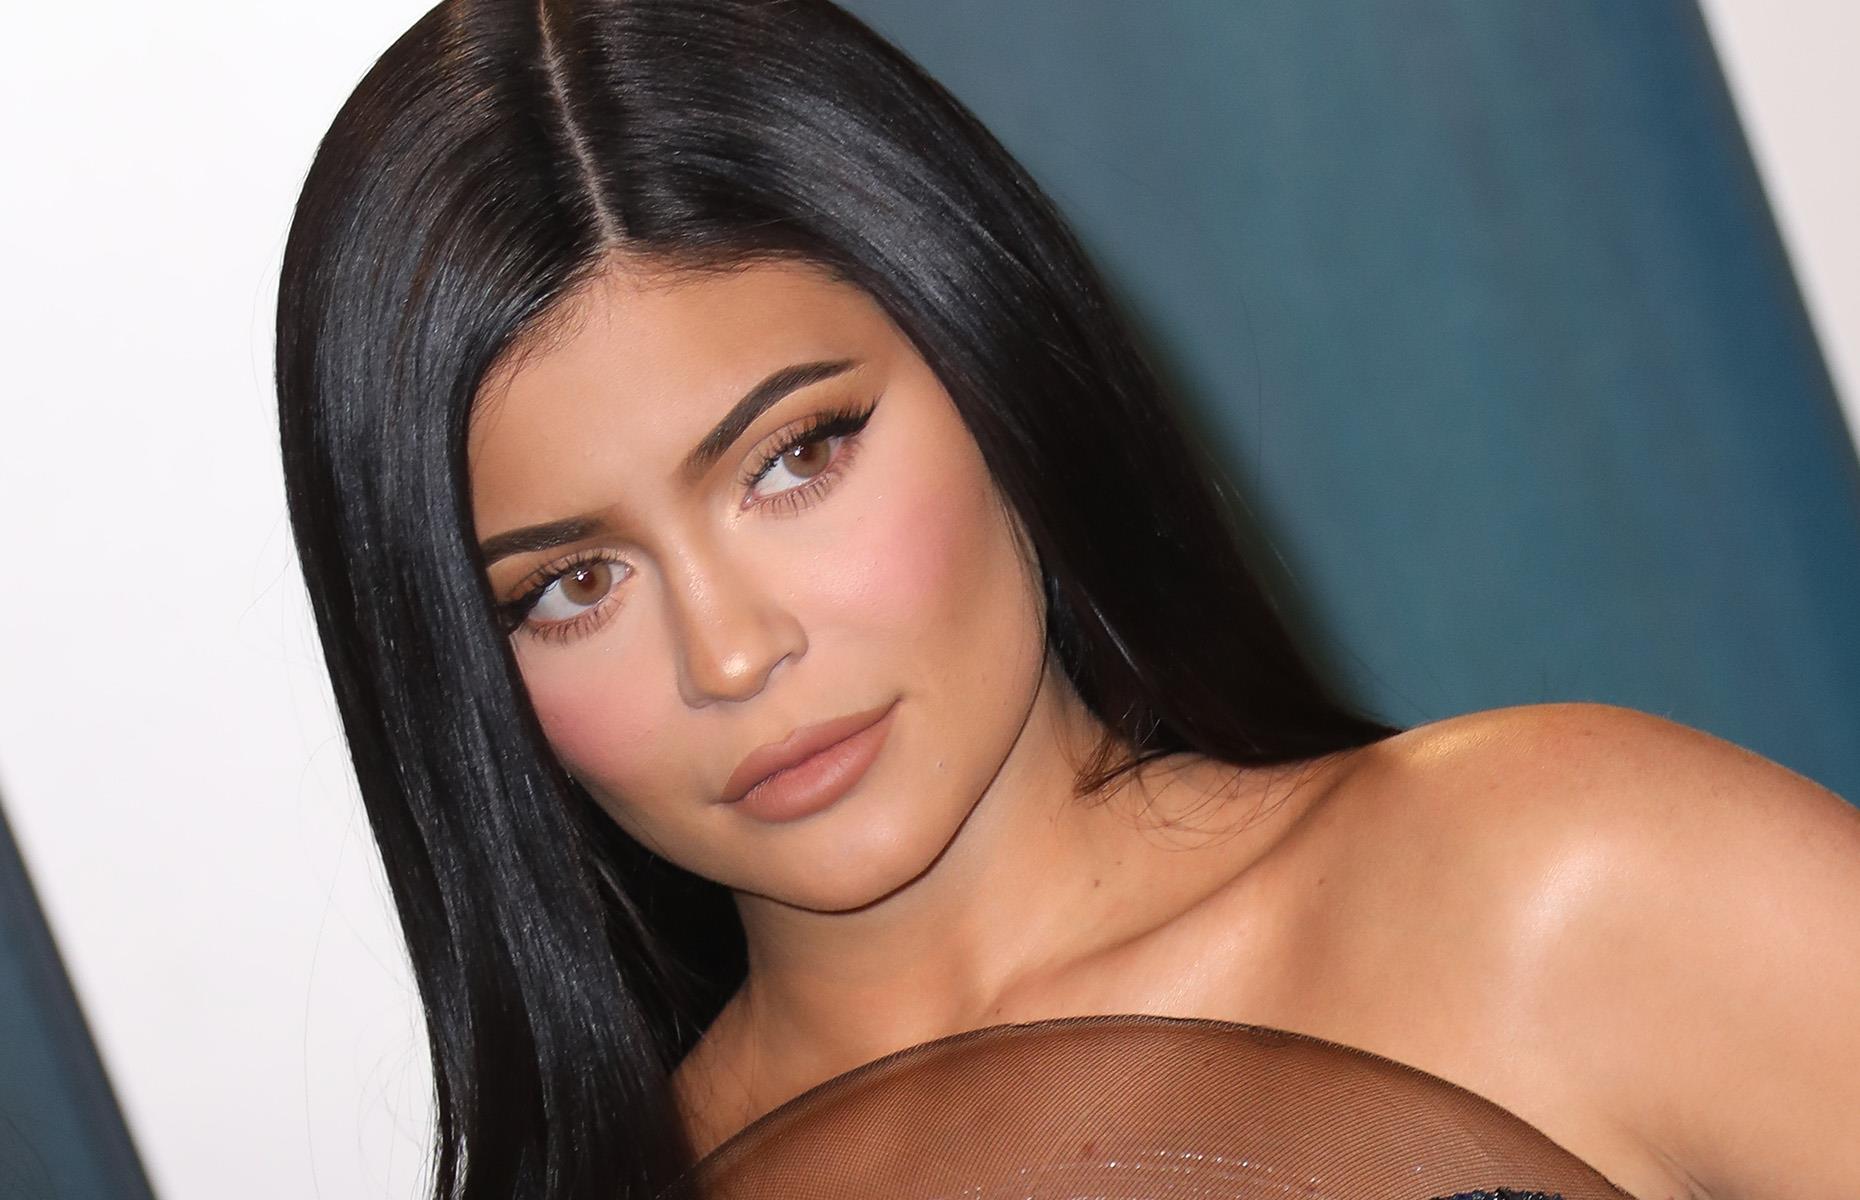 3. Kylie Jenner stripped of billionaire status